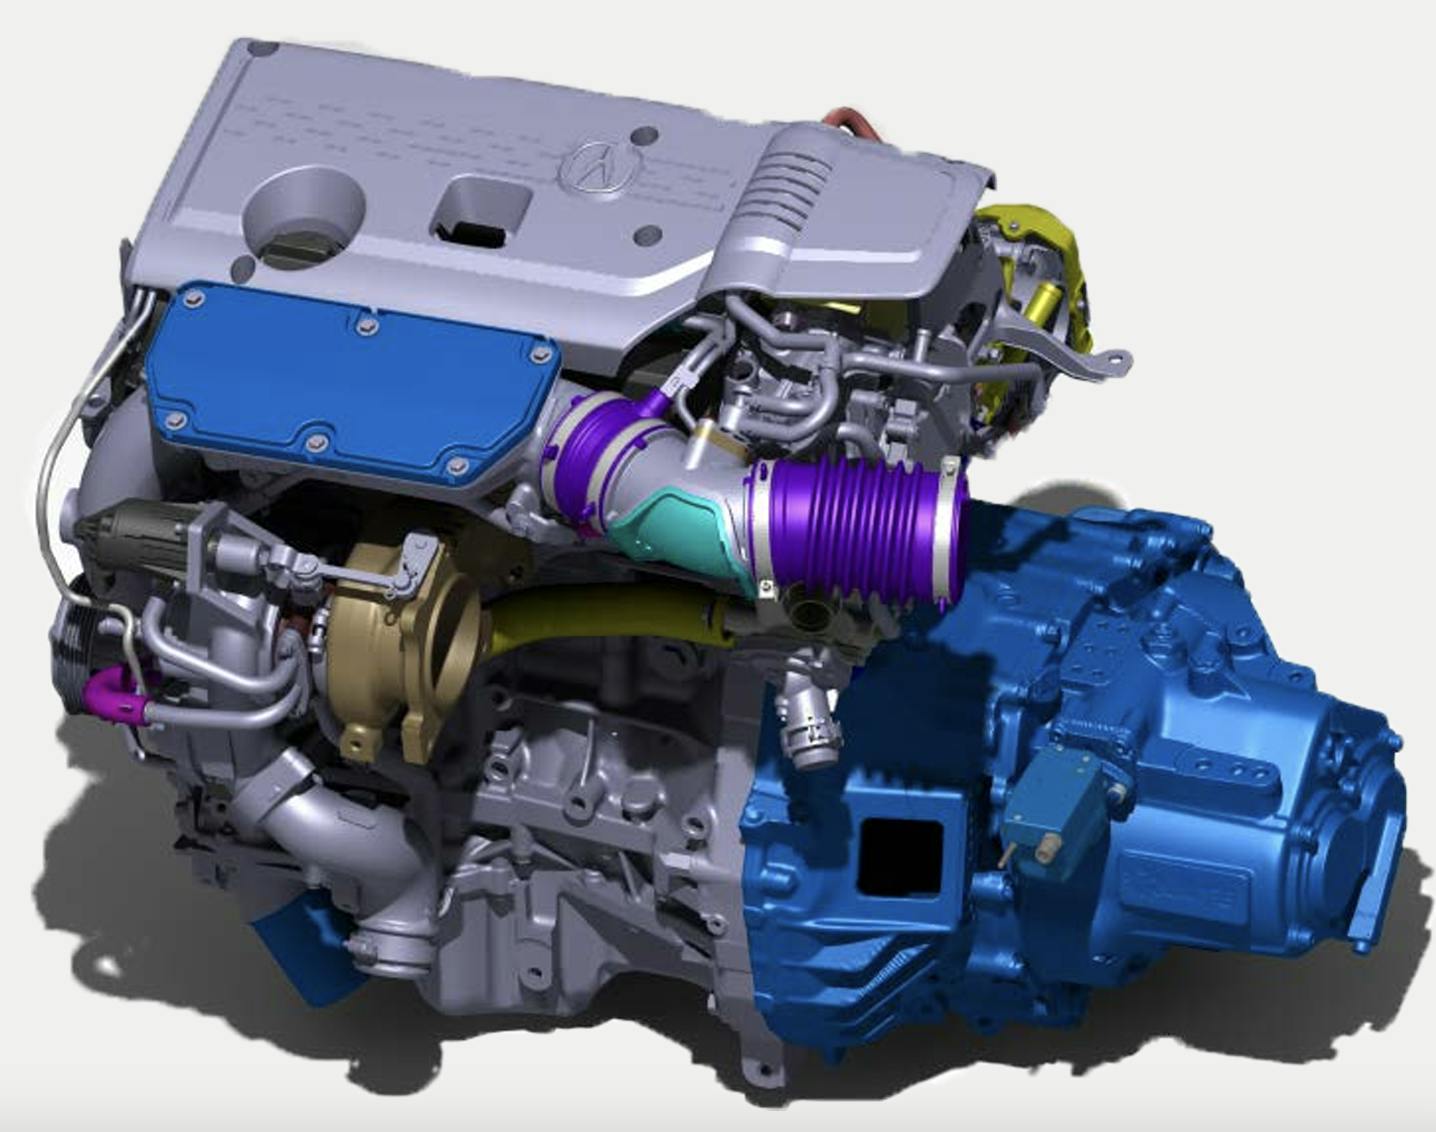 Acrua Integra Type S transmission